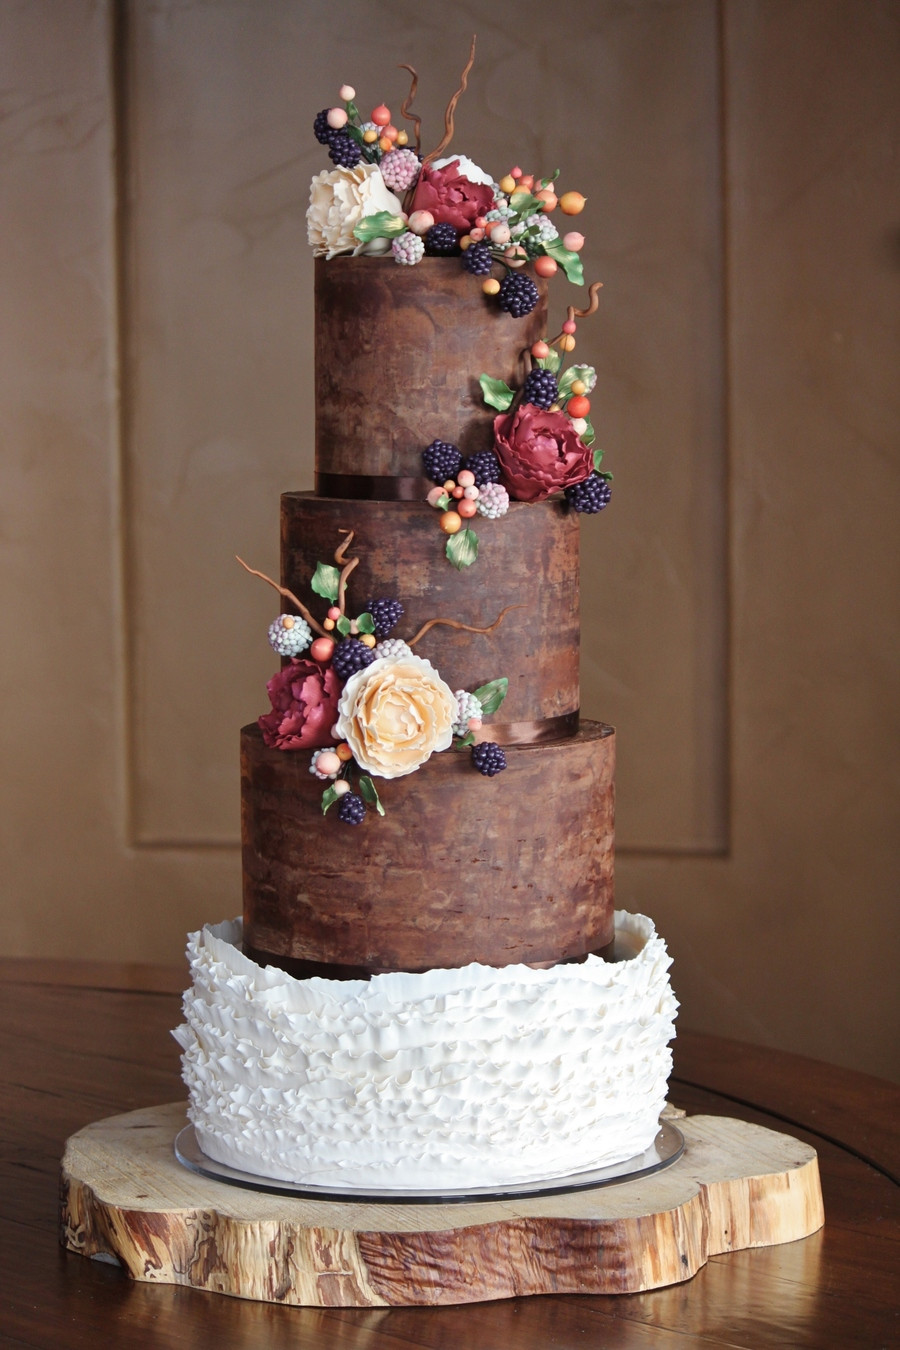 Chocolate Ganache Wedding Cakes
 Rustic And Organic Wedding Cake With Chocolate Ganache